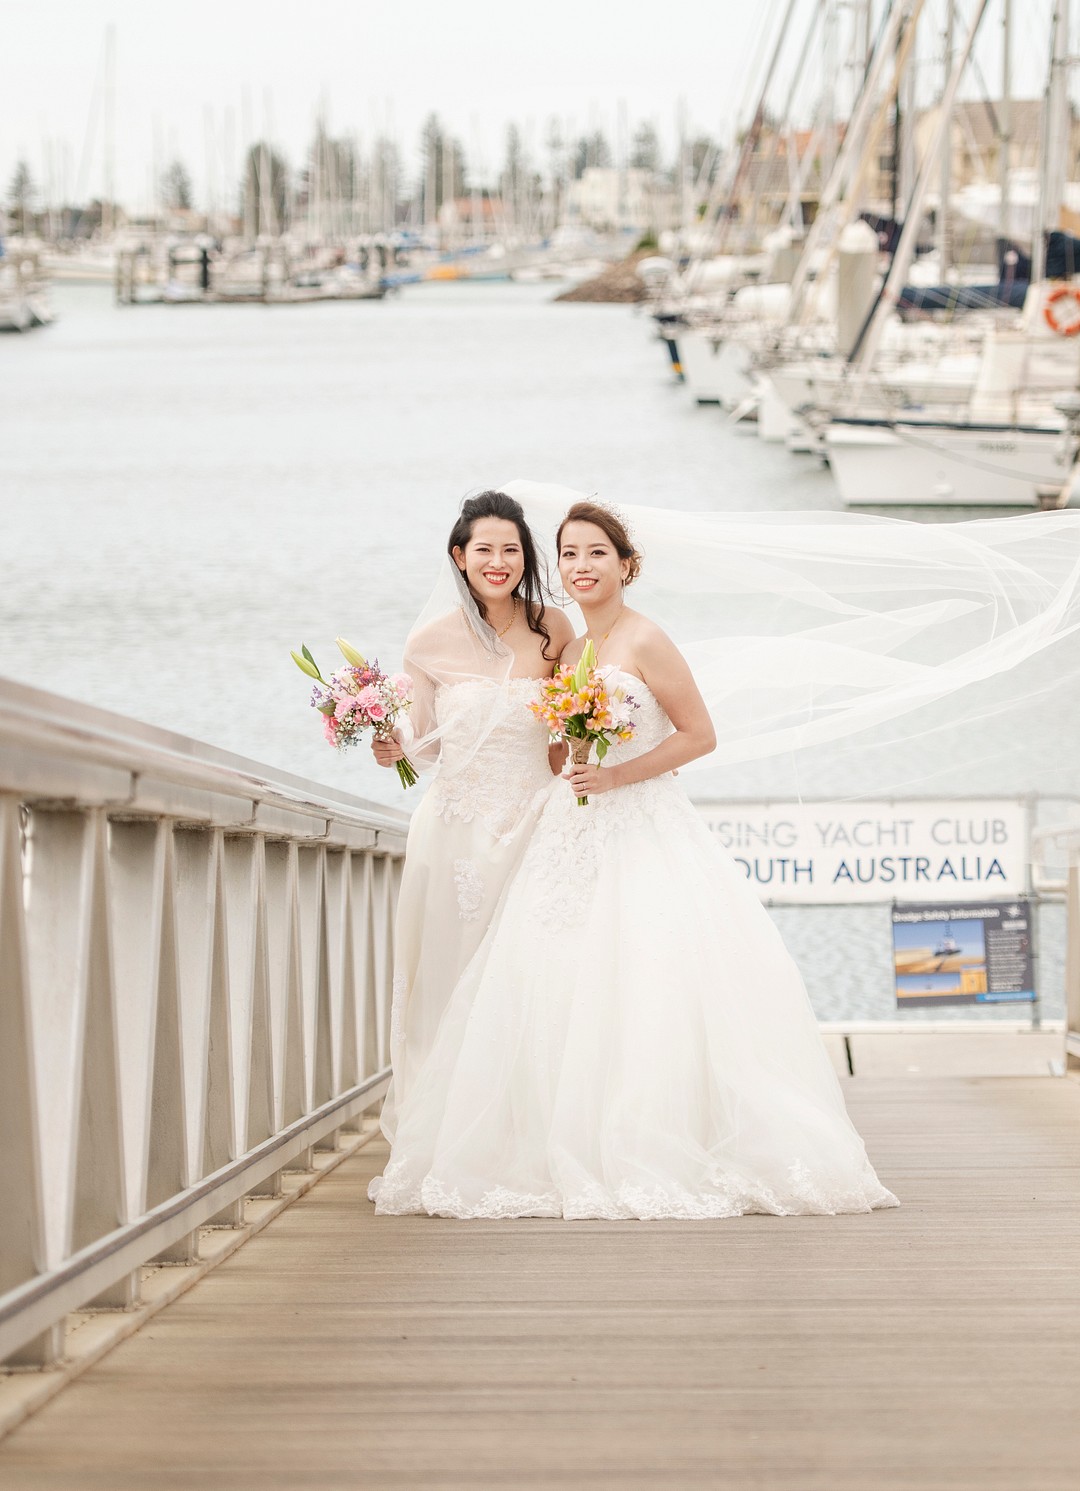 Destination beach yacht club wedding in South Australia LGBTQ+ weddings lesbian wedding two brides Chinese American white dresses docks boats